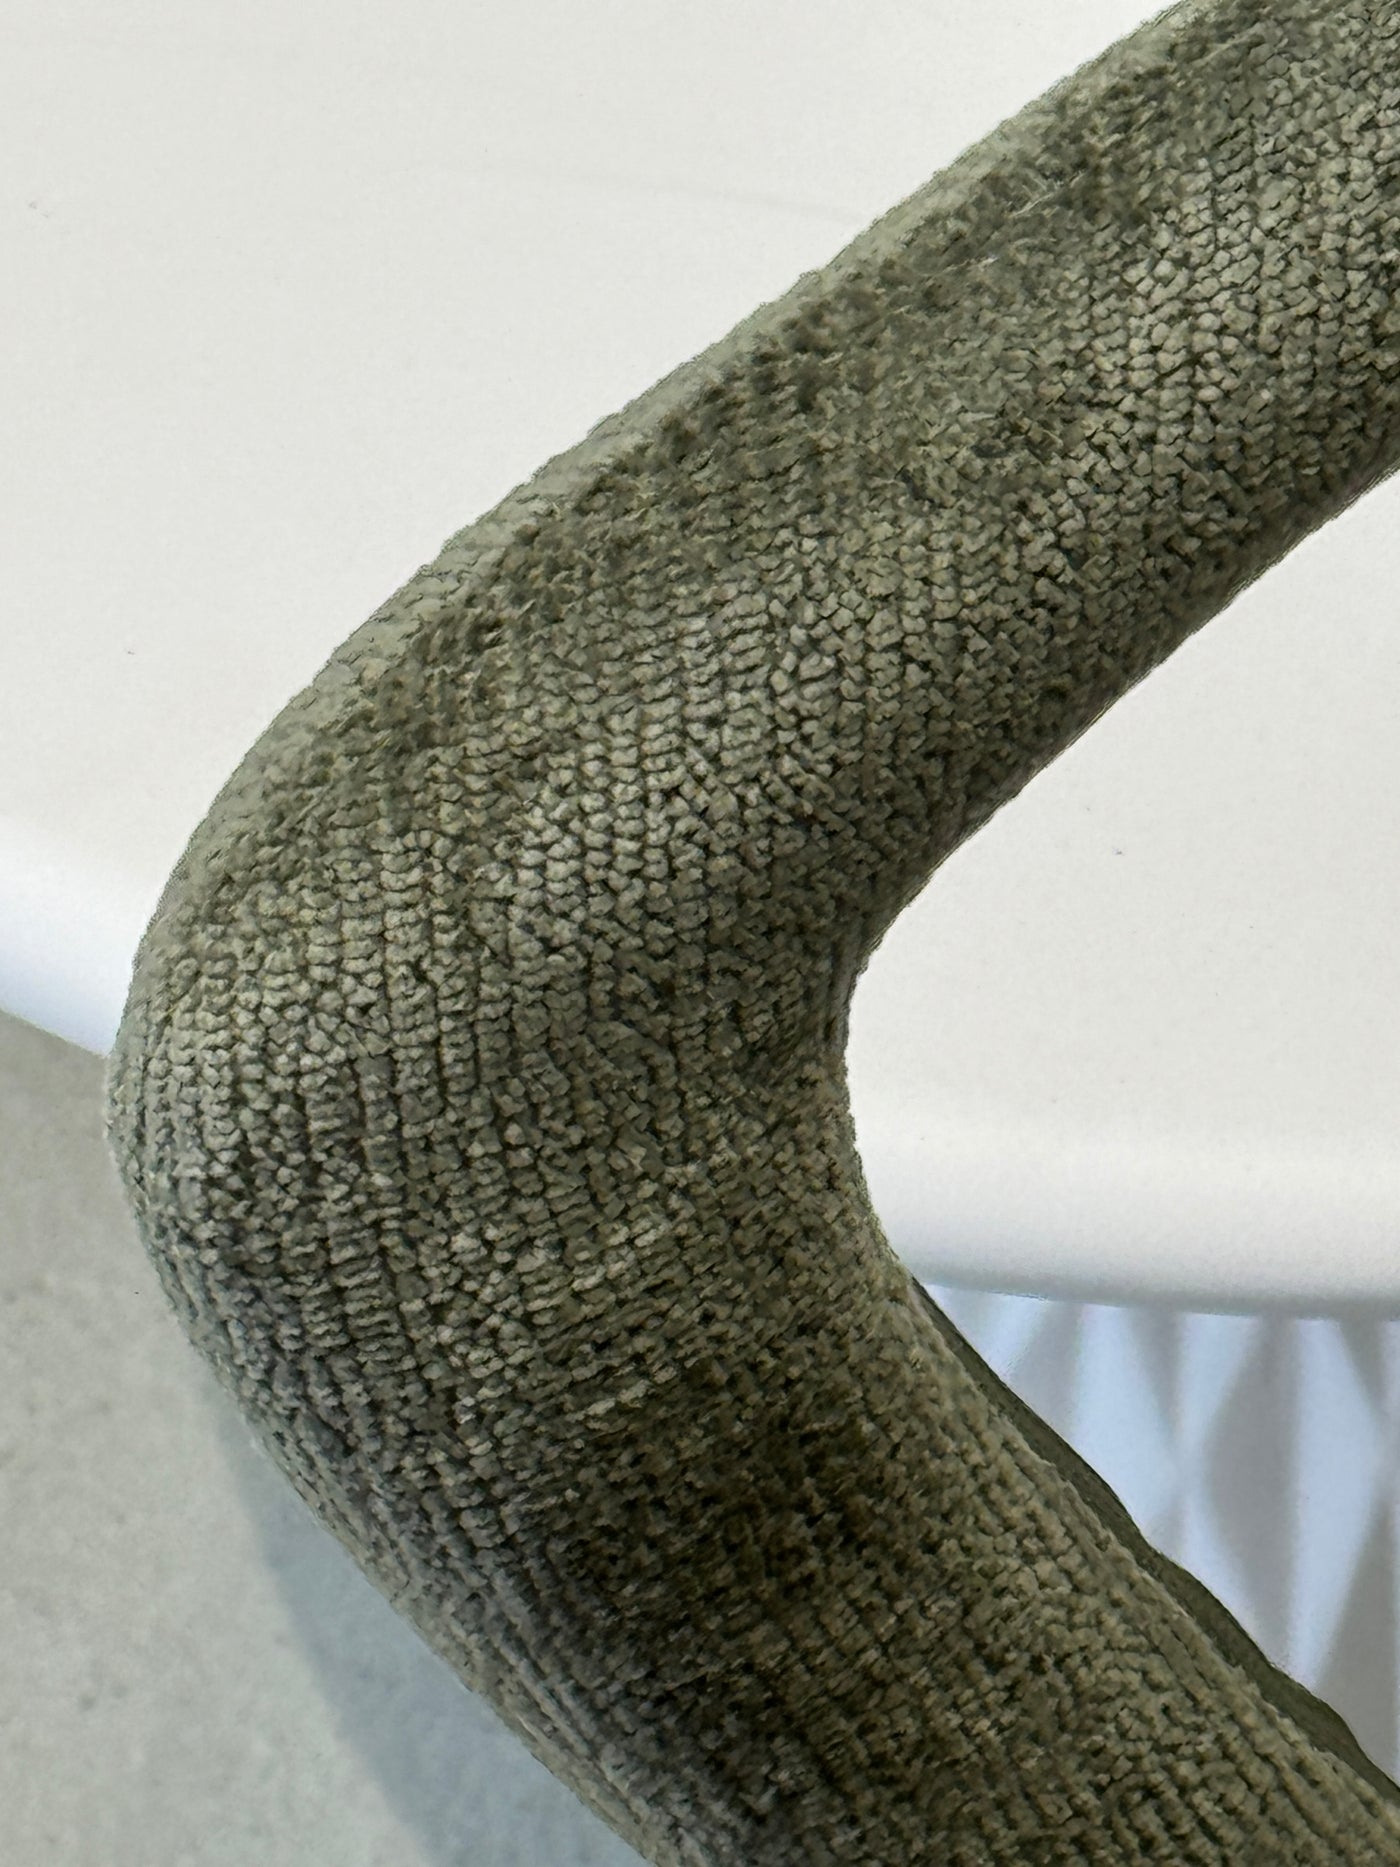 Profile Dining Chair Fern Green - Future Classics Furniture